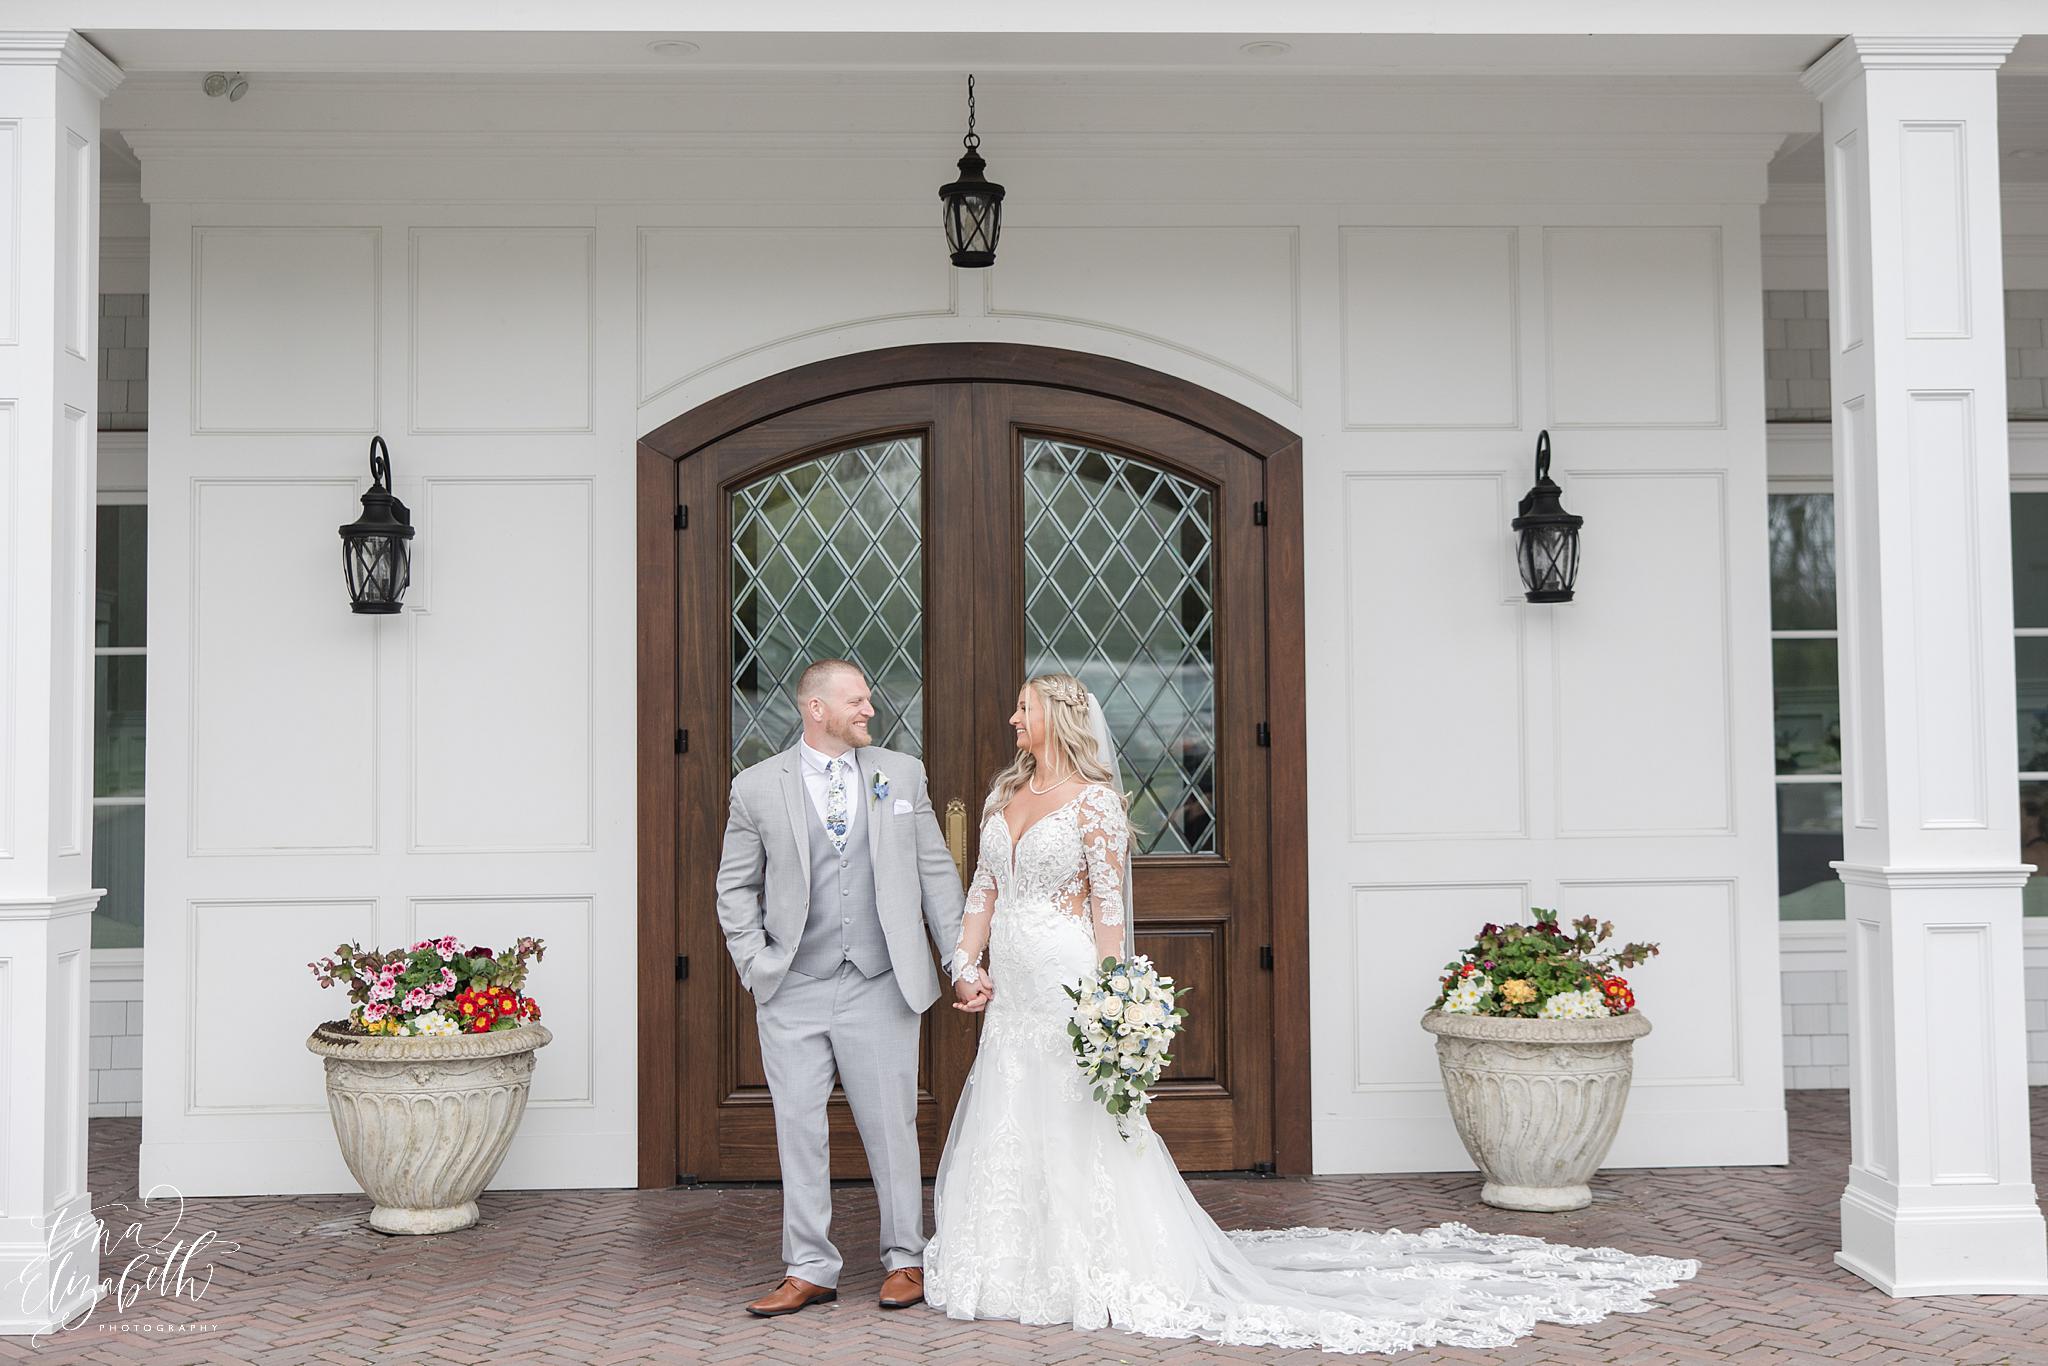 The Mill Lakeside Manor Wedding Photos - Tina Elizabeth Photography